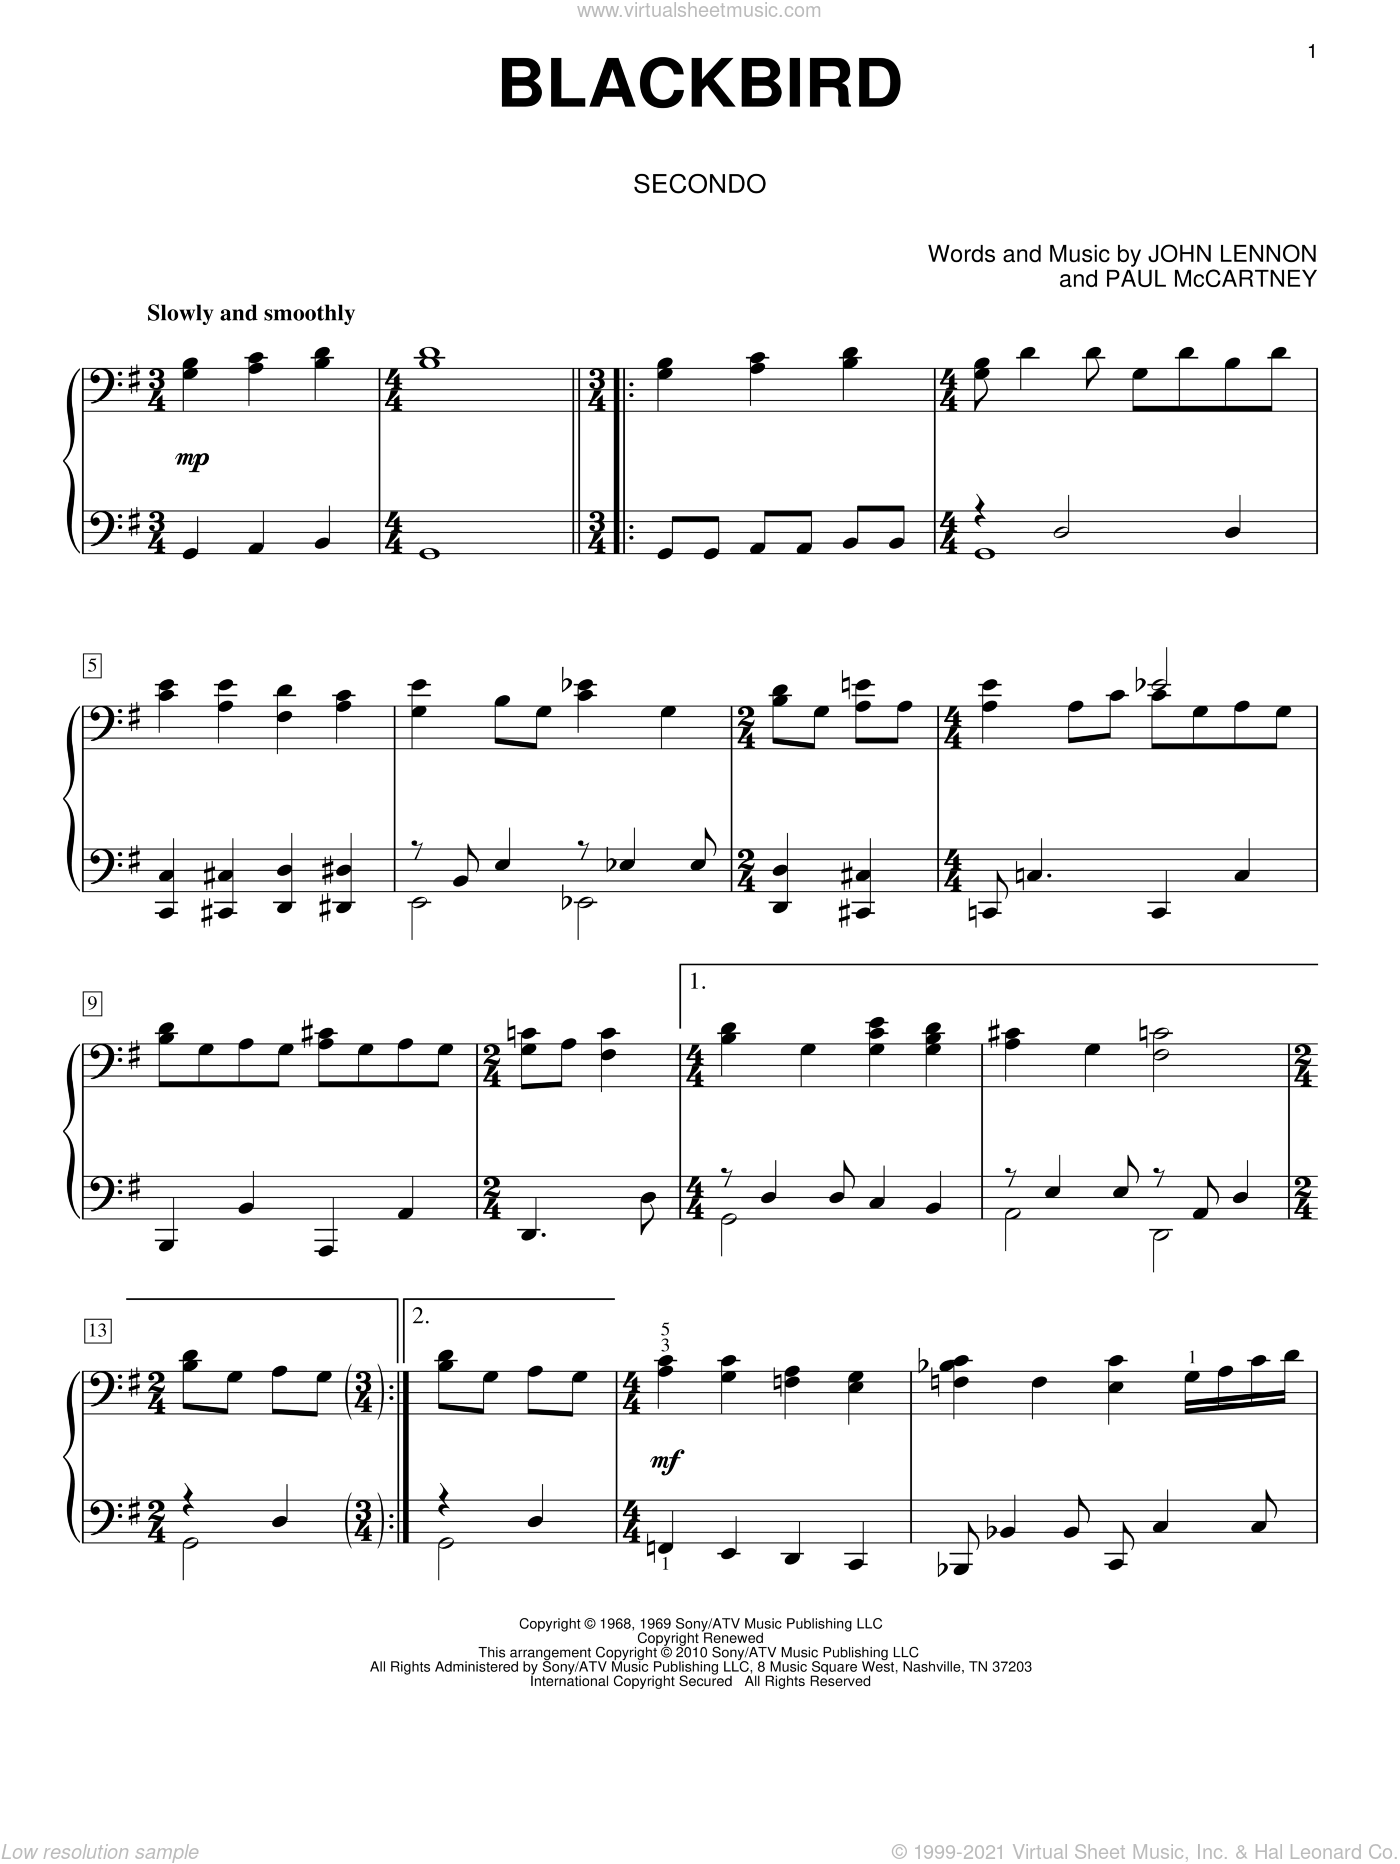 Beatles - Blackbird sheet music for piano four hands v2